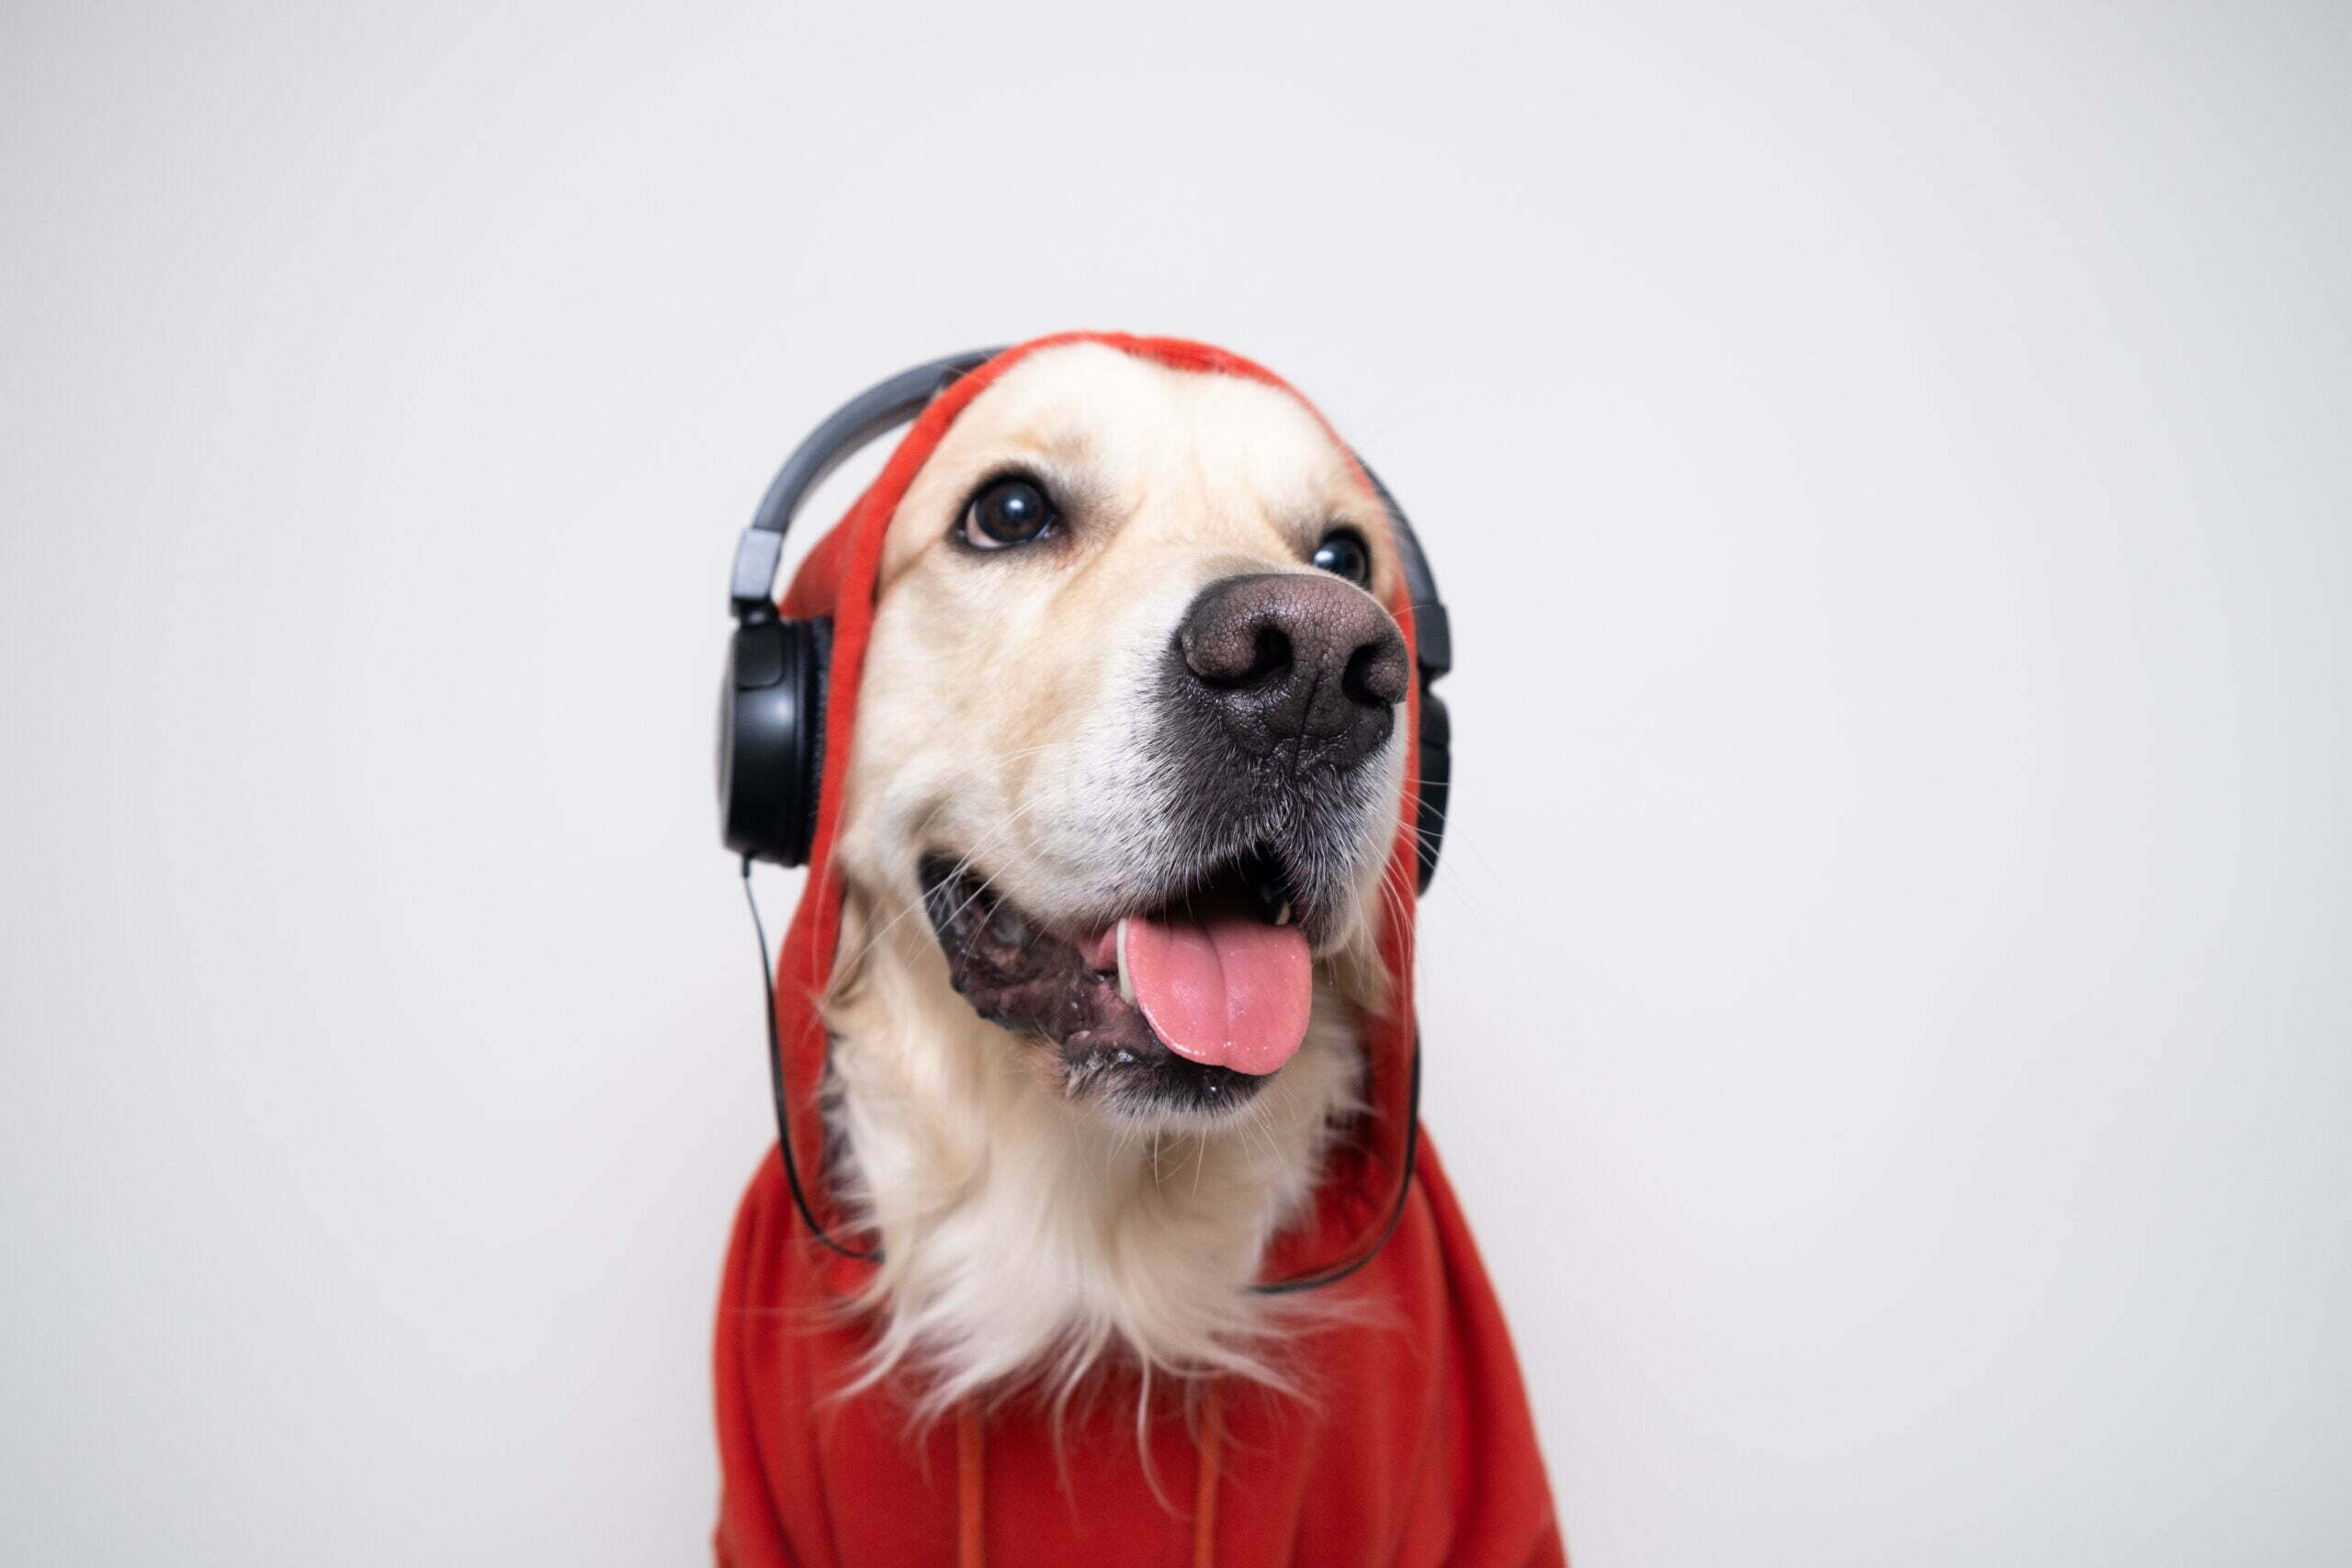 the dog is listening to music 2022 11 10 17 59 49 utc